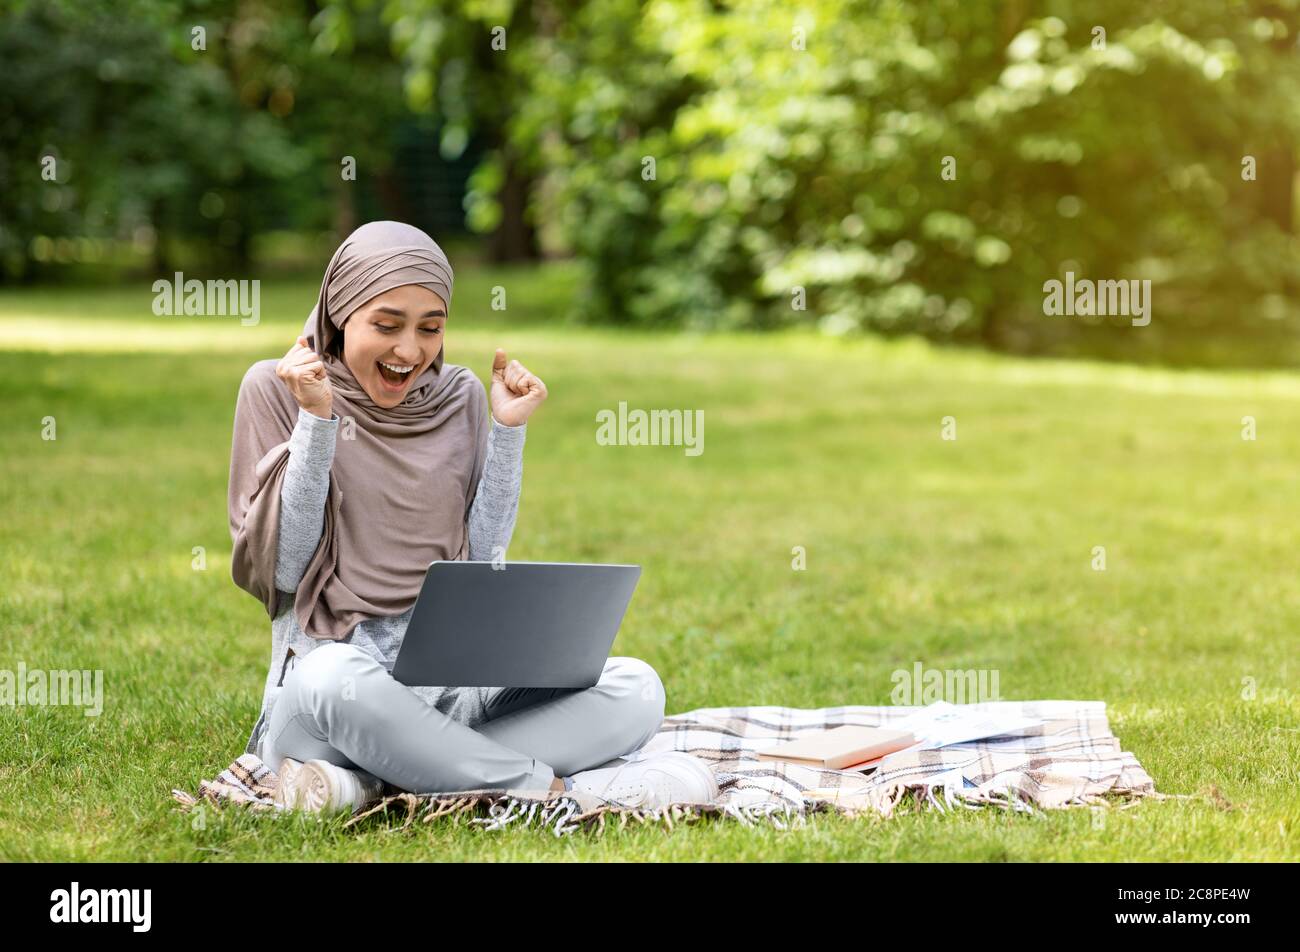 Emotional arab girl looking at laptop and screaming Stock Photo